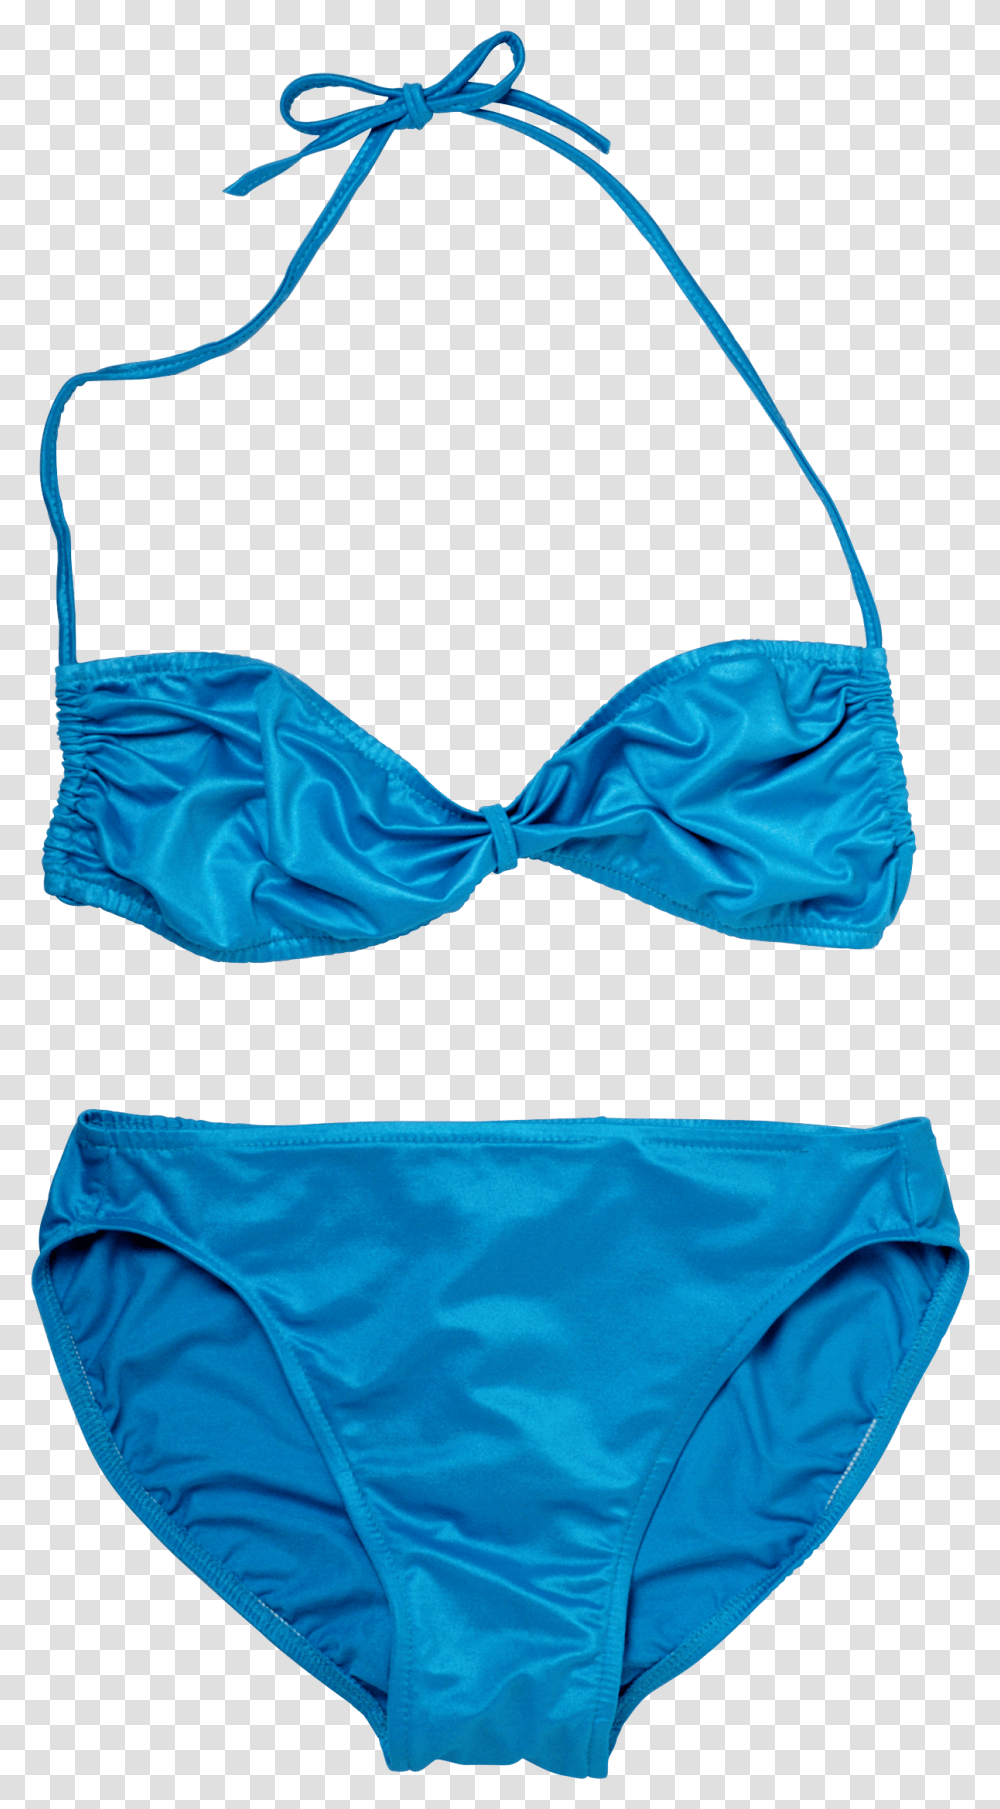 Bikini Image Blue Bikini, Clothing, Apparel, Underwear, Lingerie Transparent Png